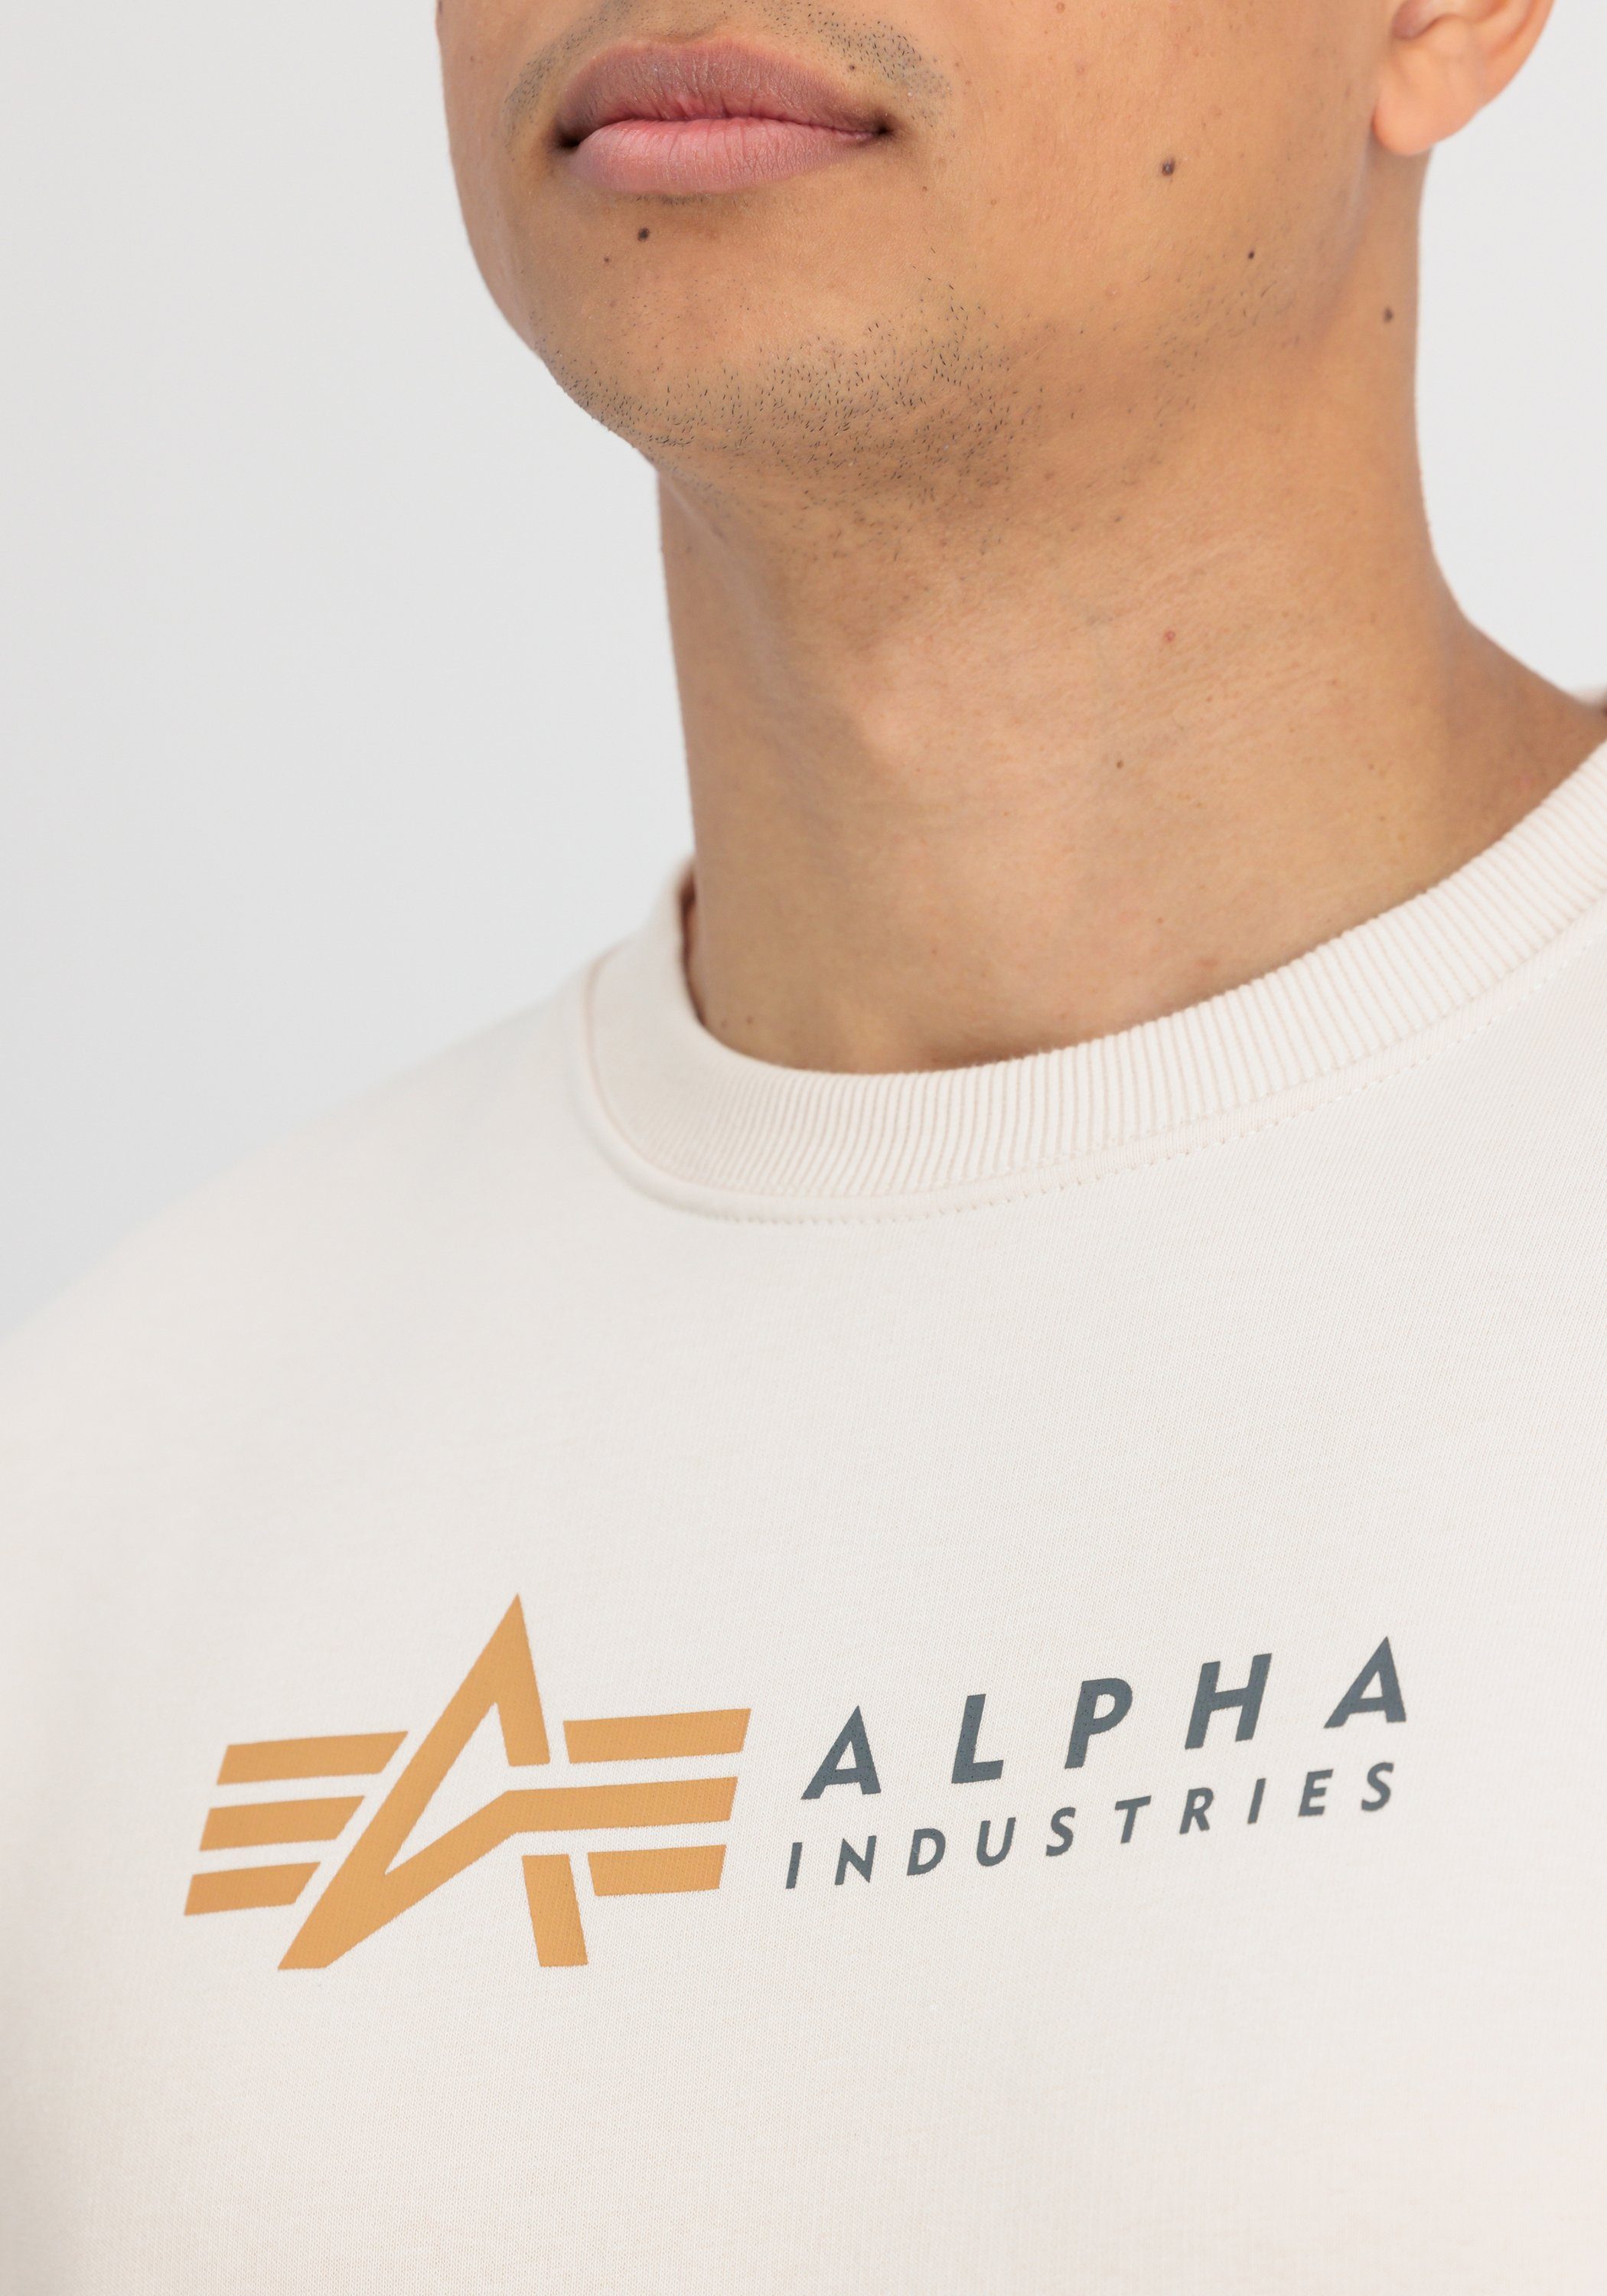 Sweatshirts Sweater Alpha - jet Industries Sweater Alpha Men Label Alpha stream white Industries